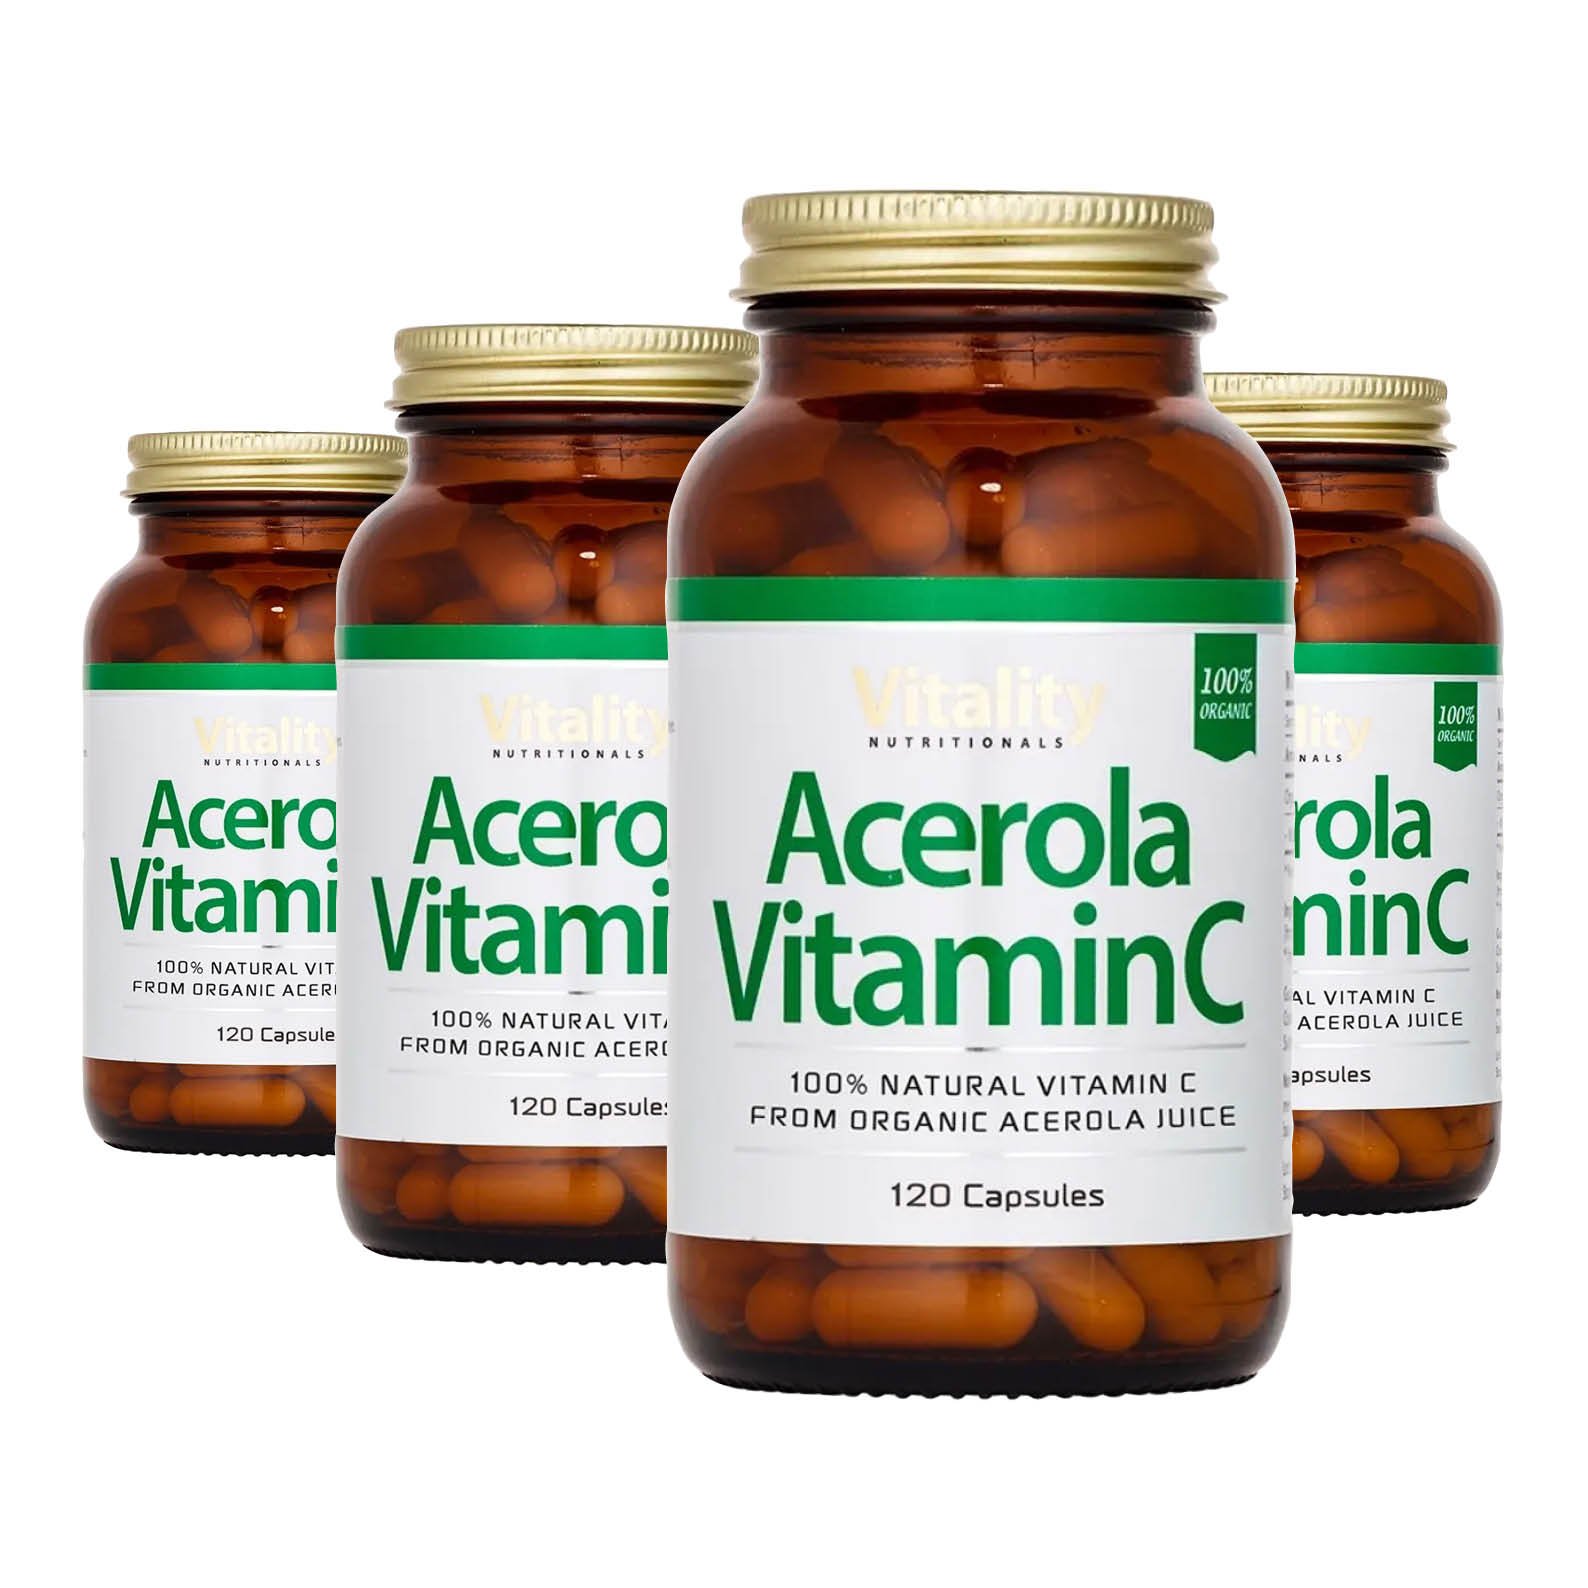 Acérola Bio, 25% Vitamine C  120 comprimés - AMOSEEDS 